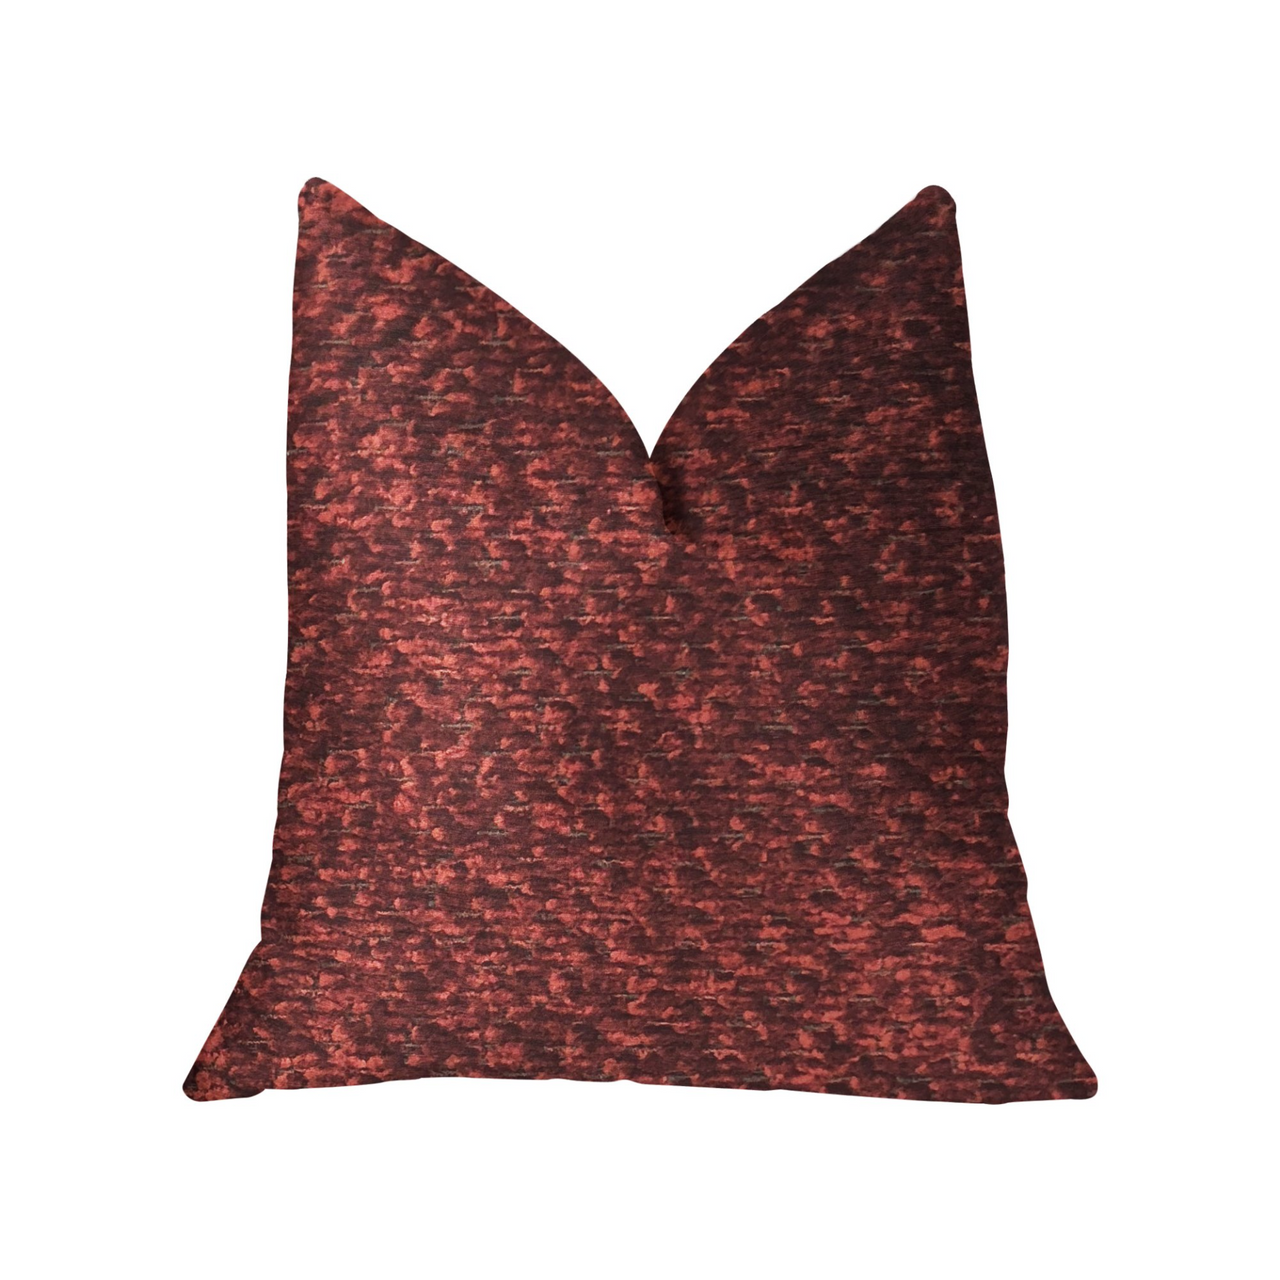 Hibiscus Burgundy Red Luxury Throw Pillow